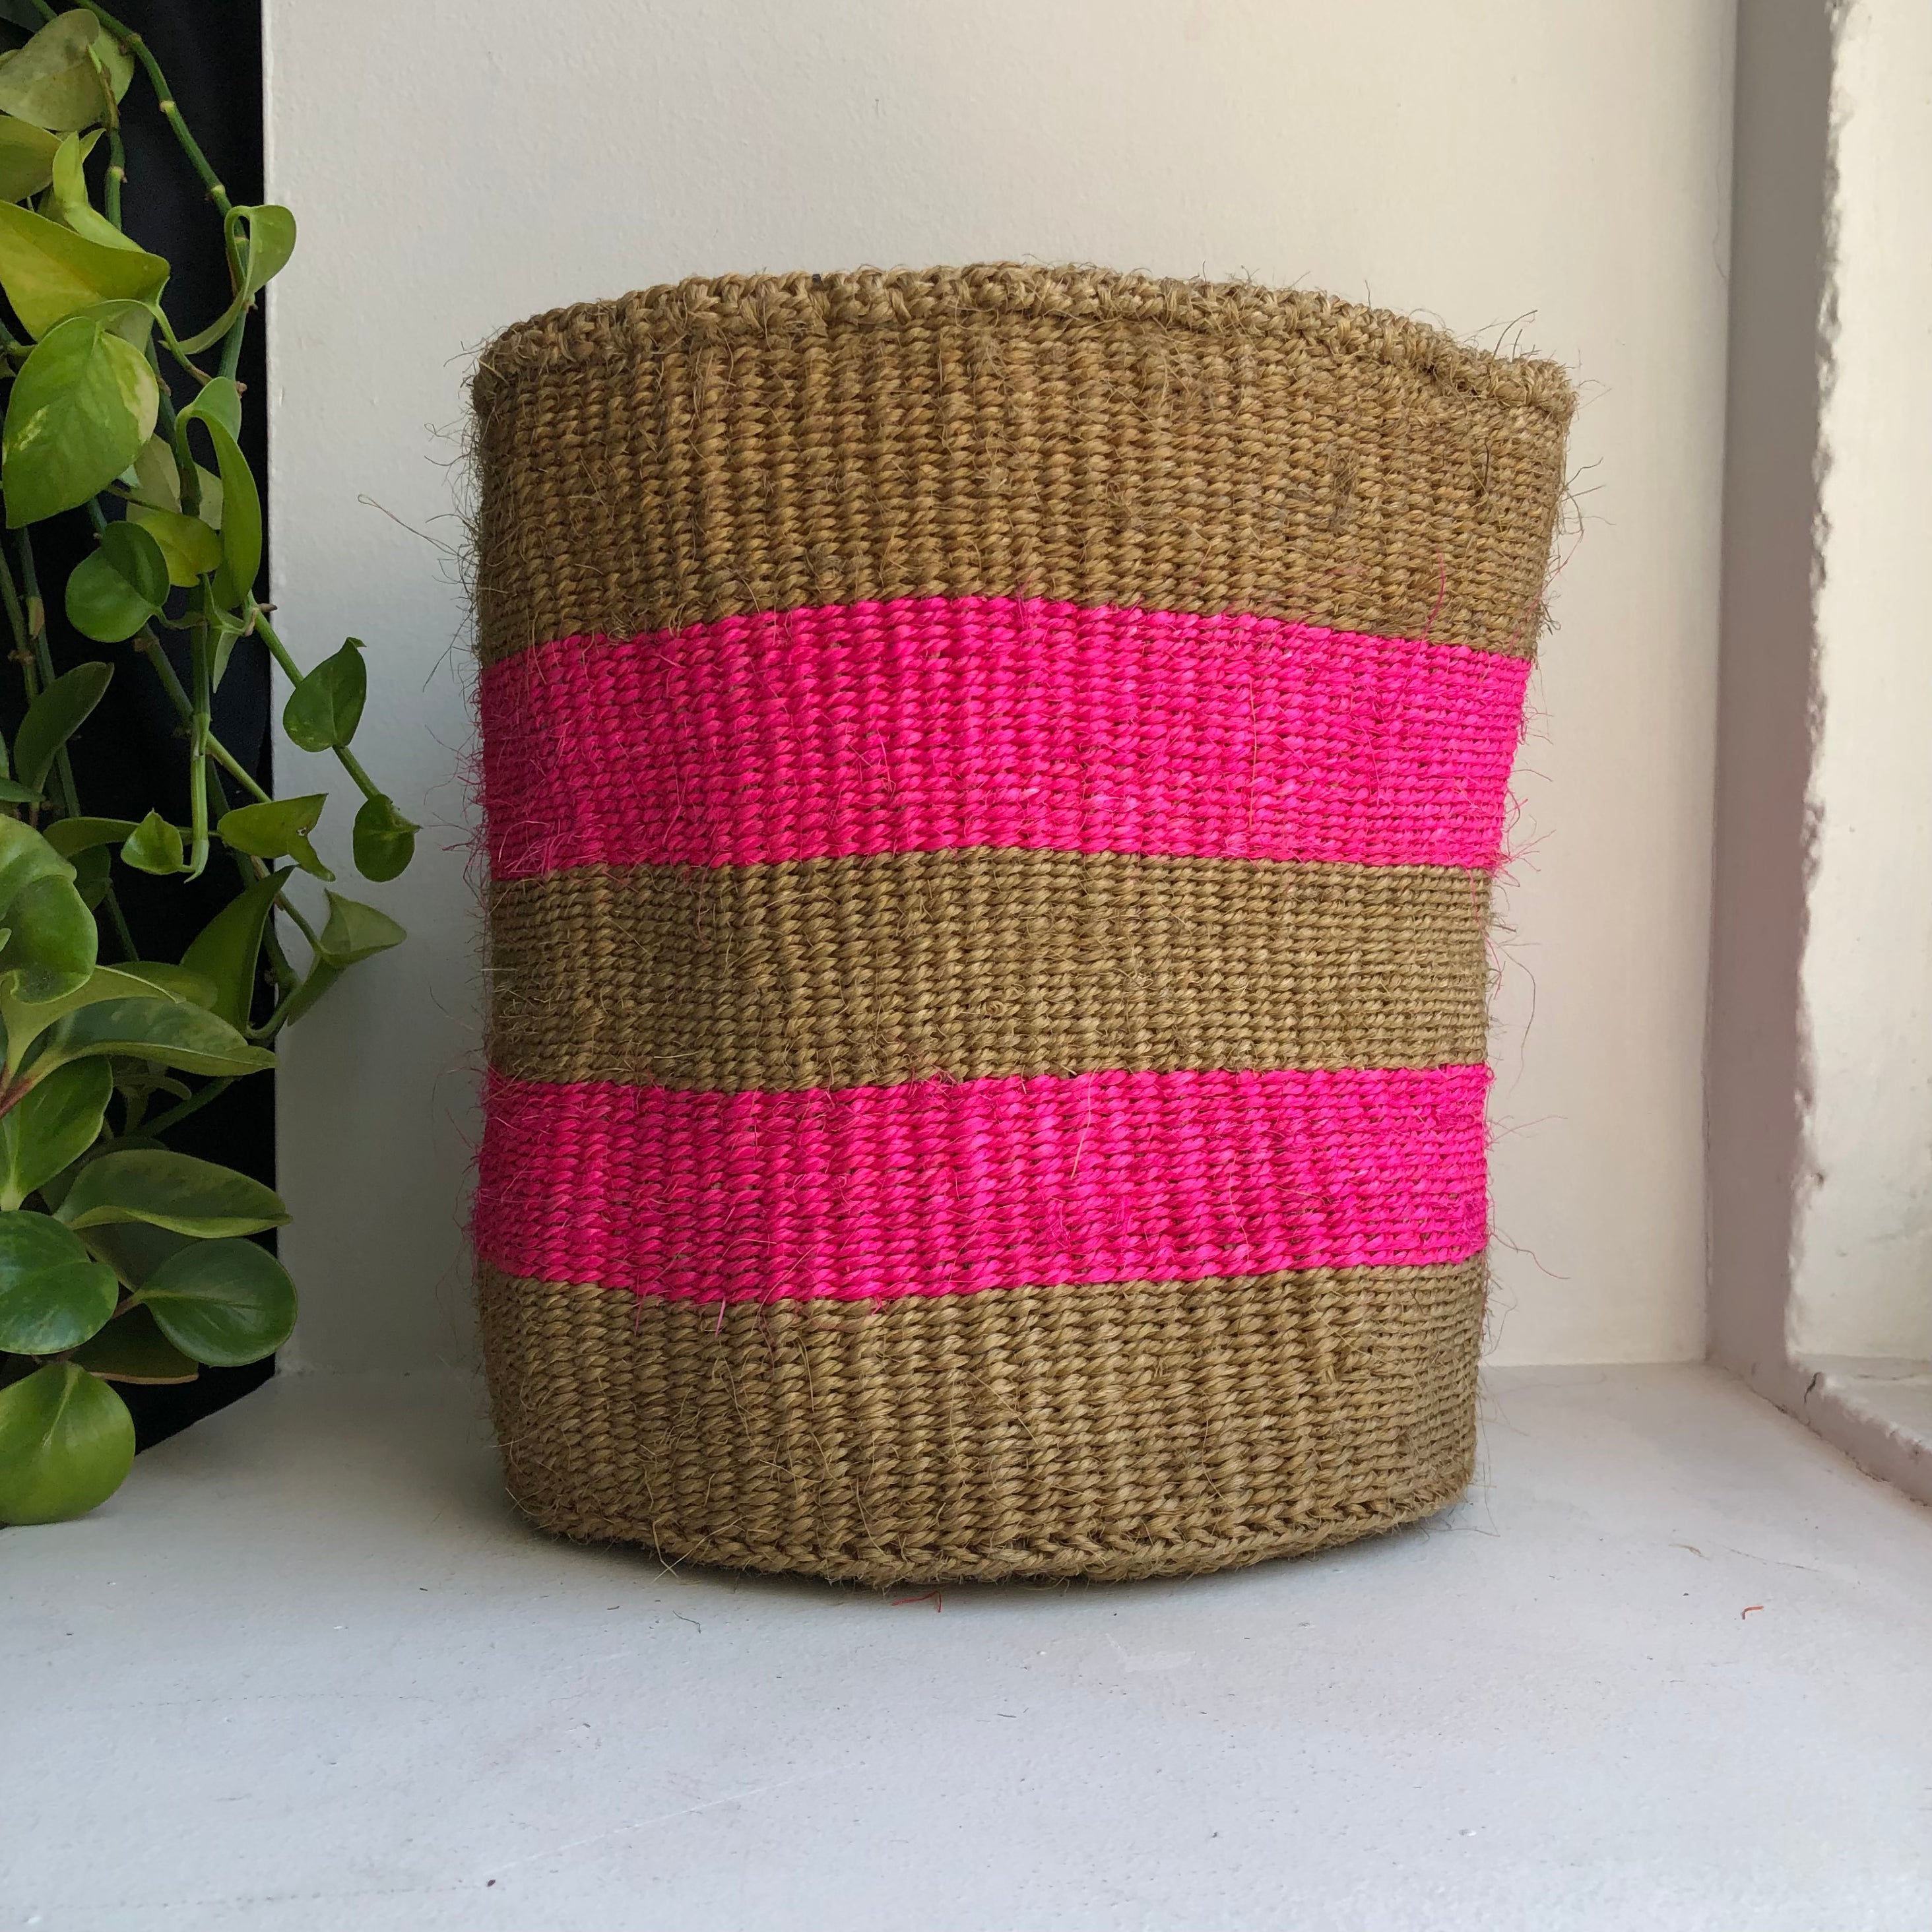 10" sisal basket with pink stripes